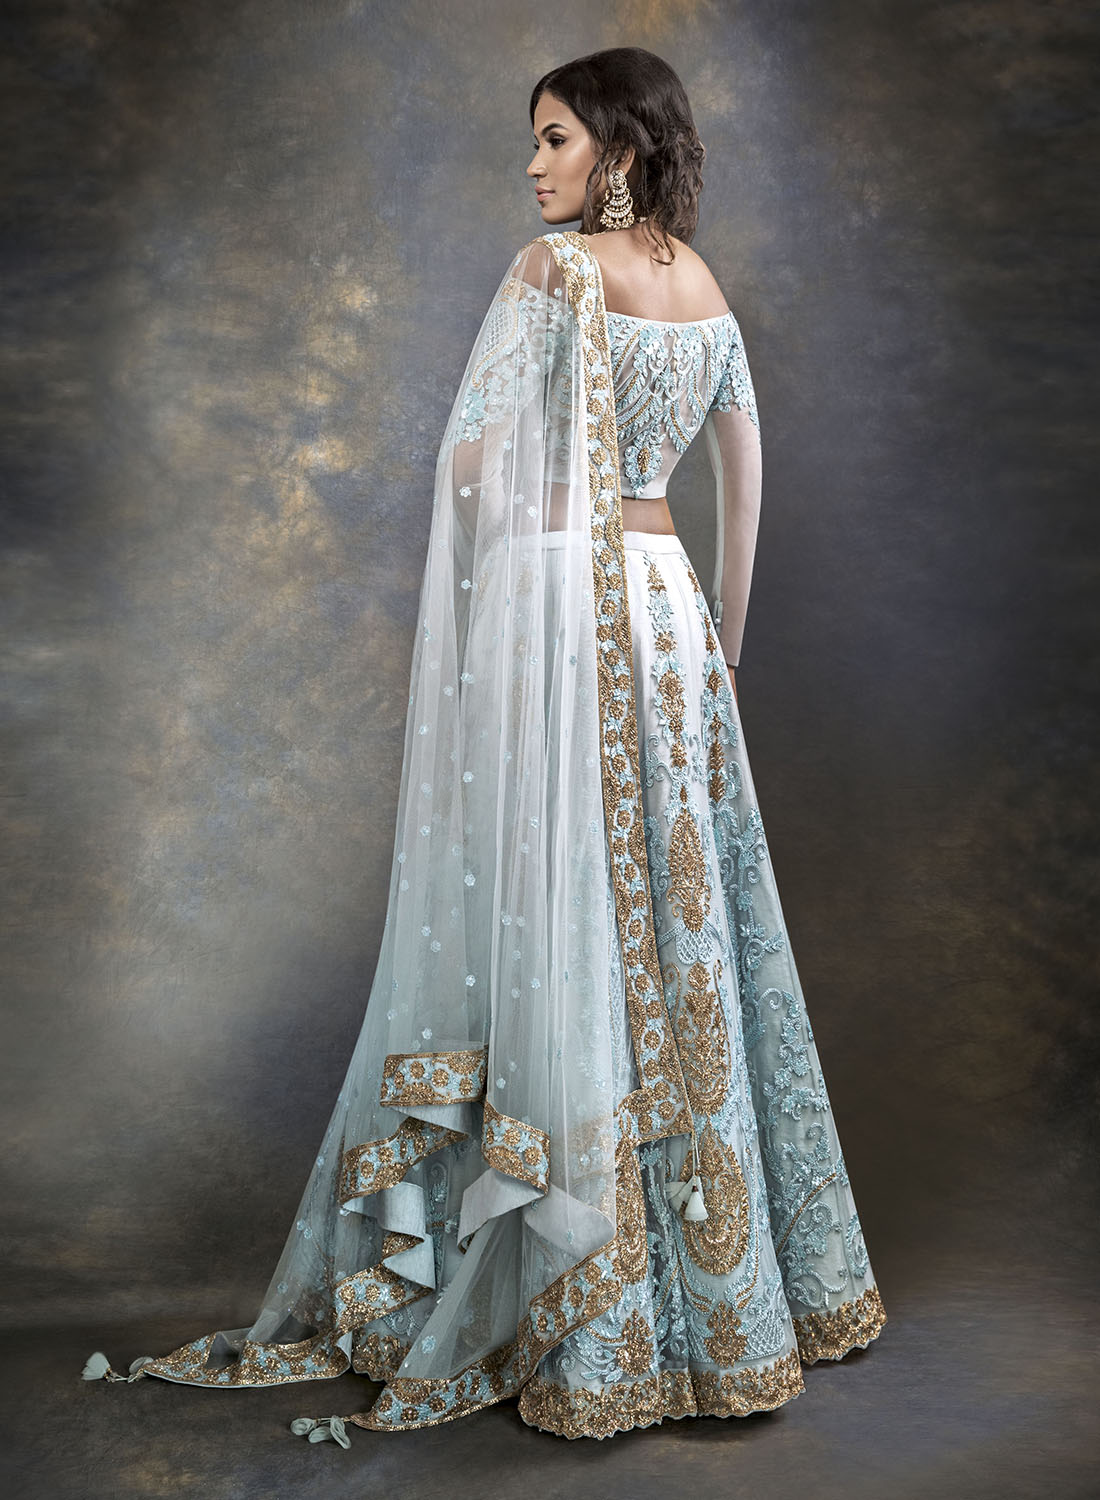 Indian Wedding Dresses: 18 Unusual Looks & Faqs | Pakistani wedding dresses,  Indian wedding dress, Asian bridal dresses